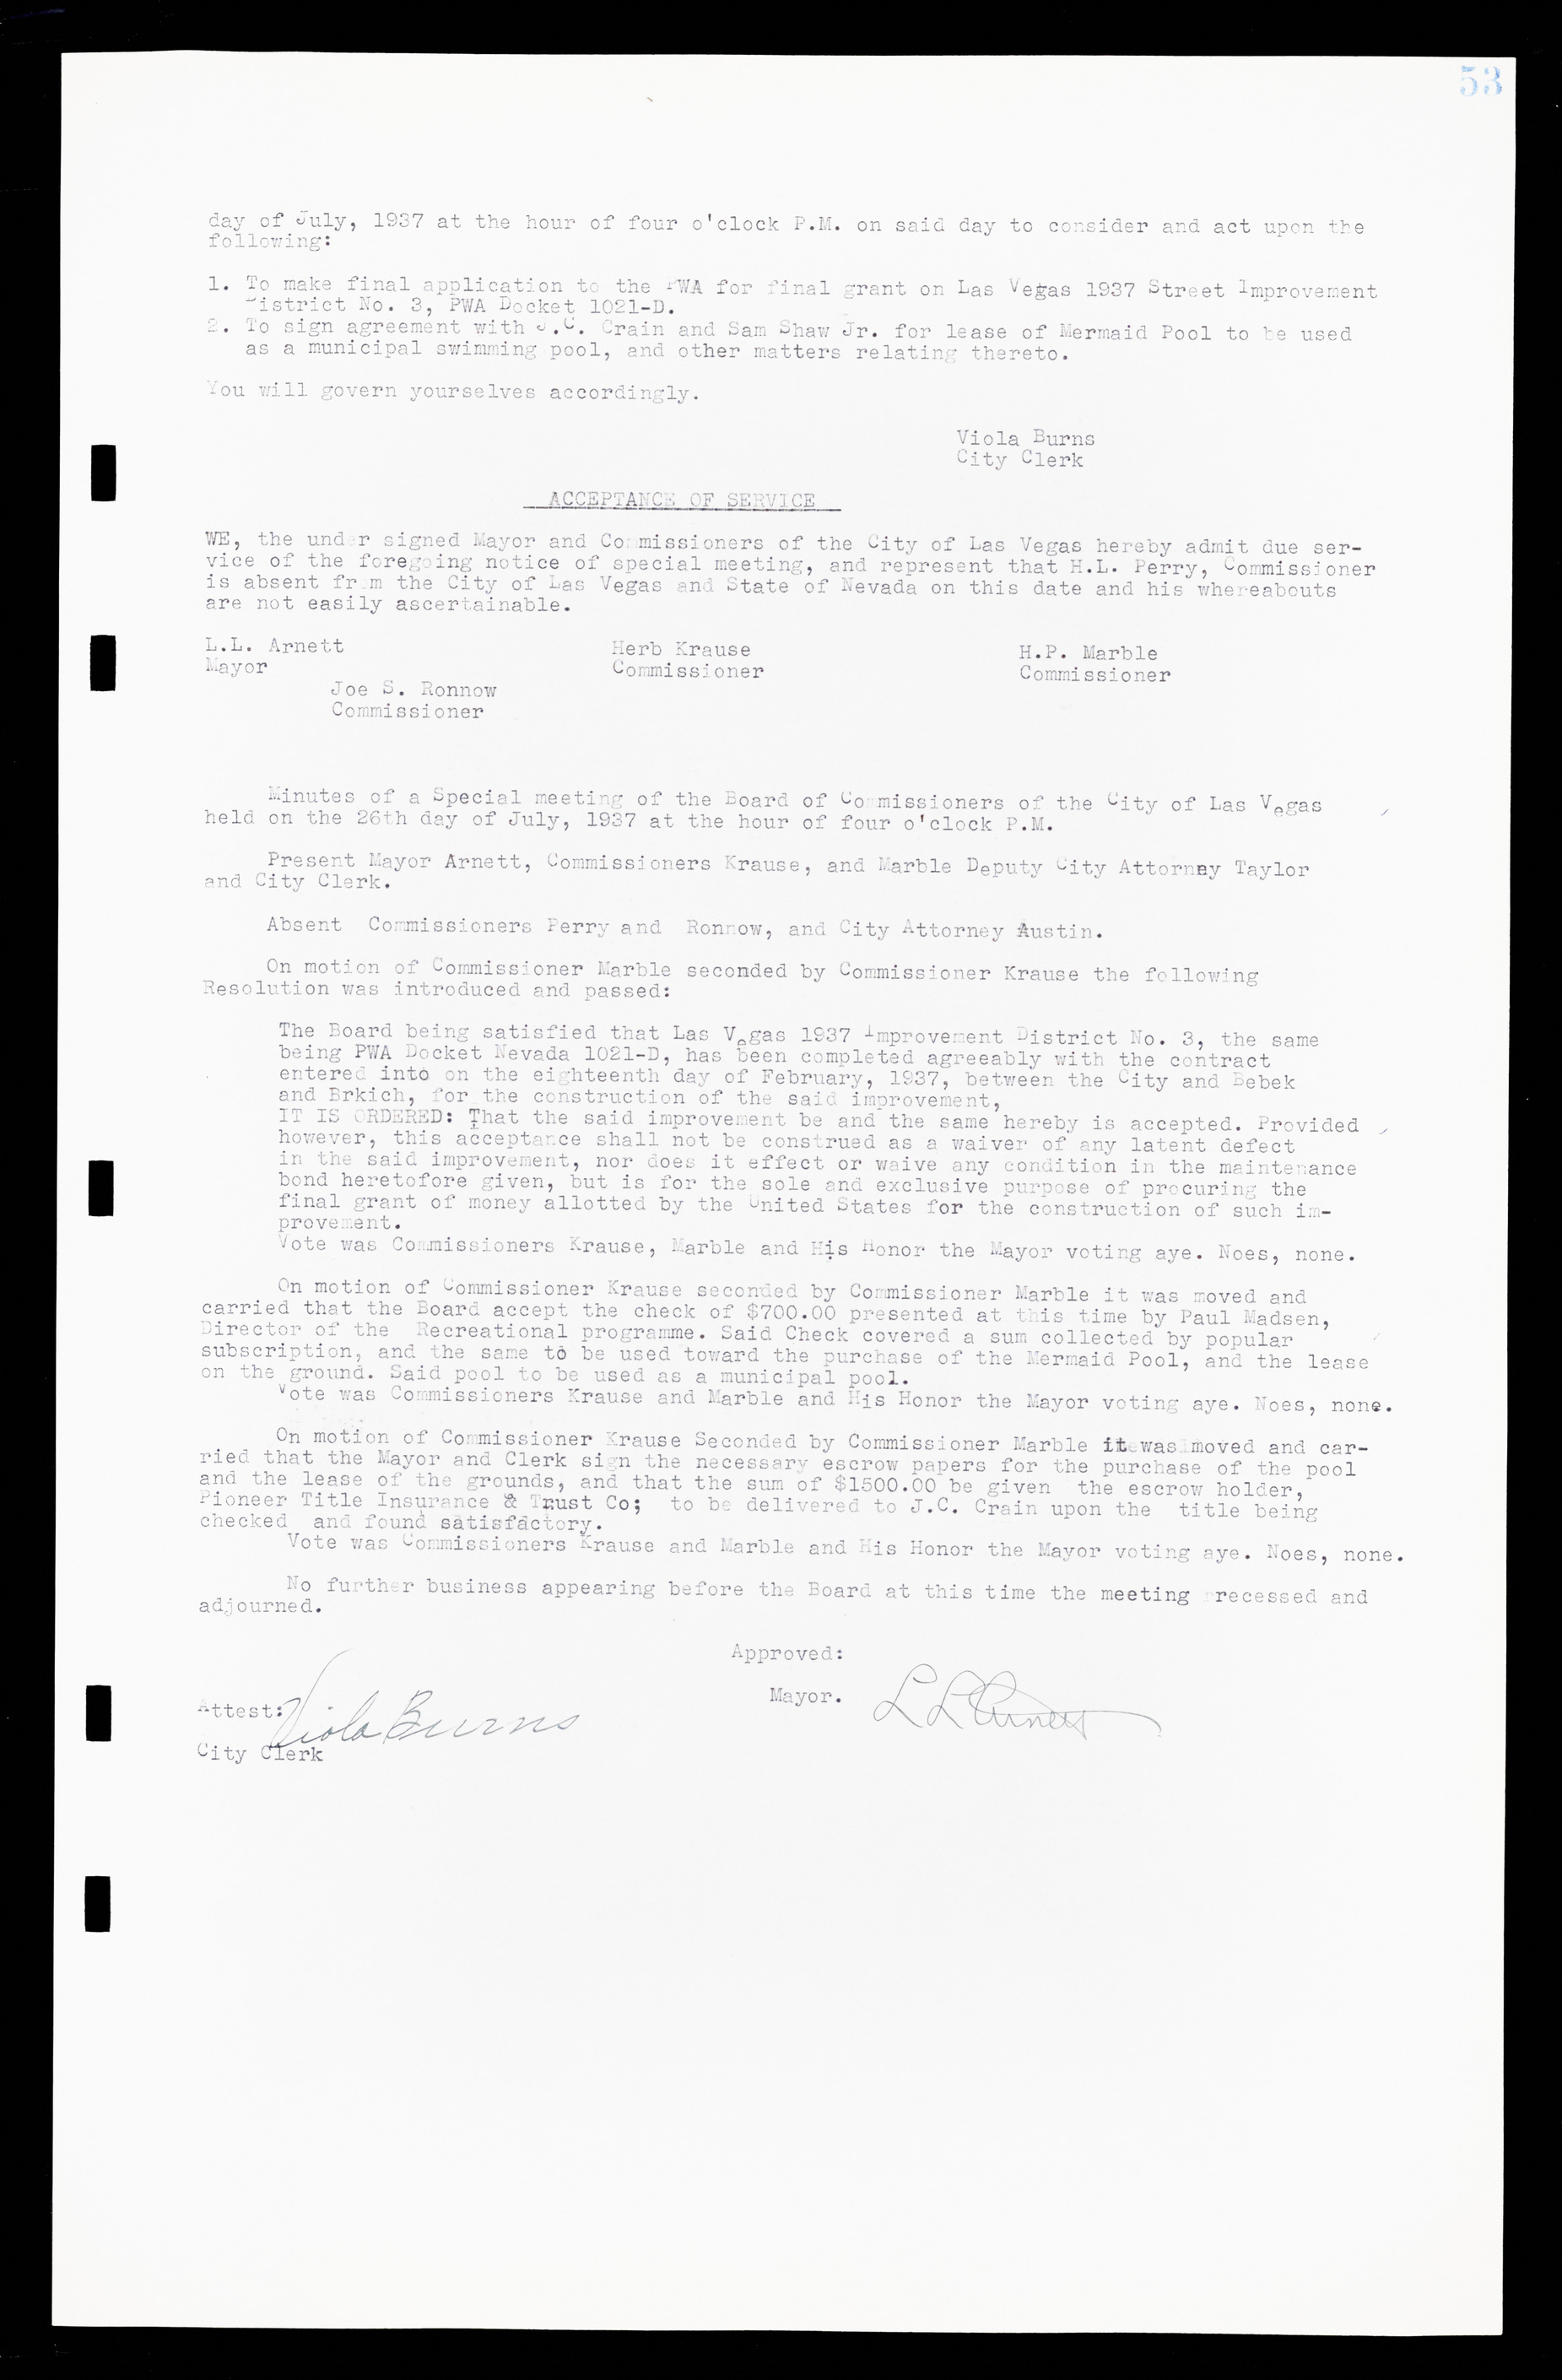 Las Vegas City Commission Minutes, February 17, 1937 to August 4, 1942, lvc000004-61